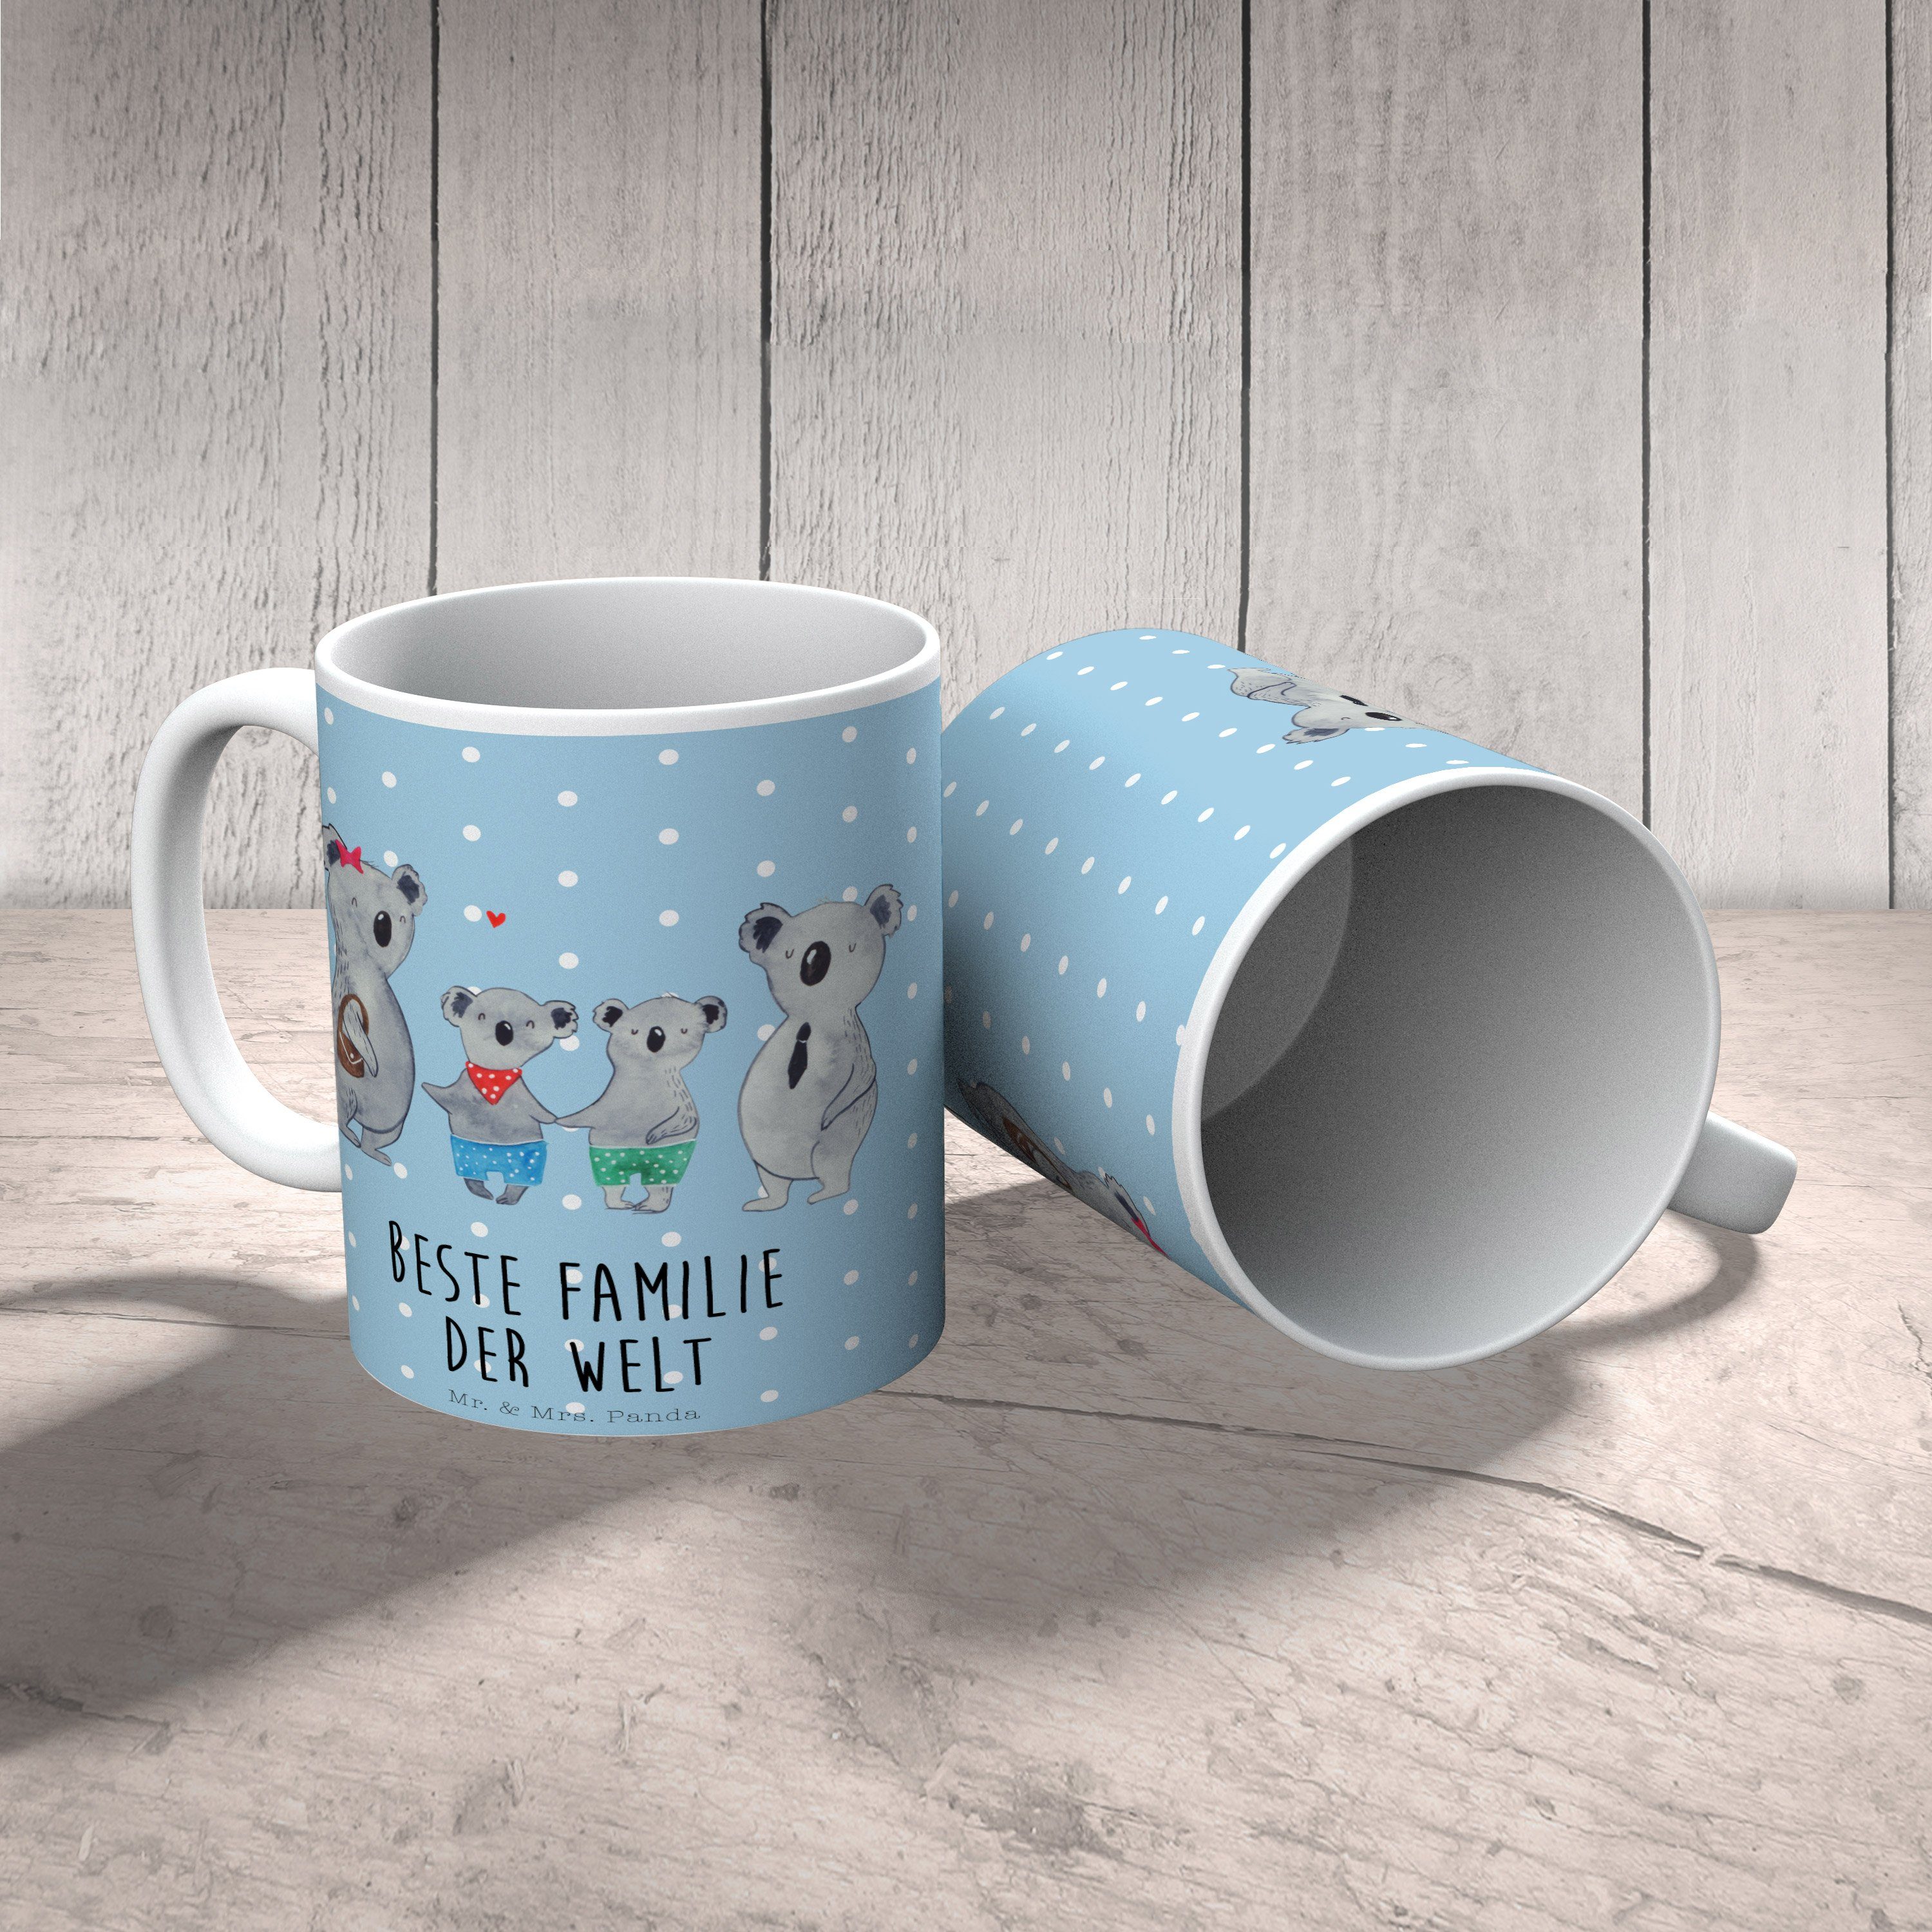 - Keramik Mrs. Panda Mr. & Koalabär, Pastell Tasse - Geschenk, Familie Koala zwei Kaffeetasse, Blau